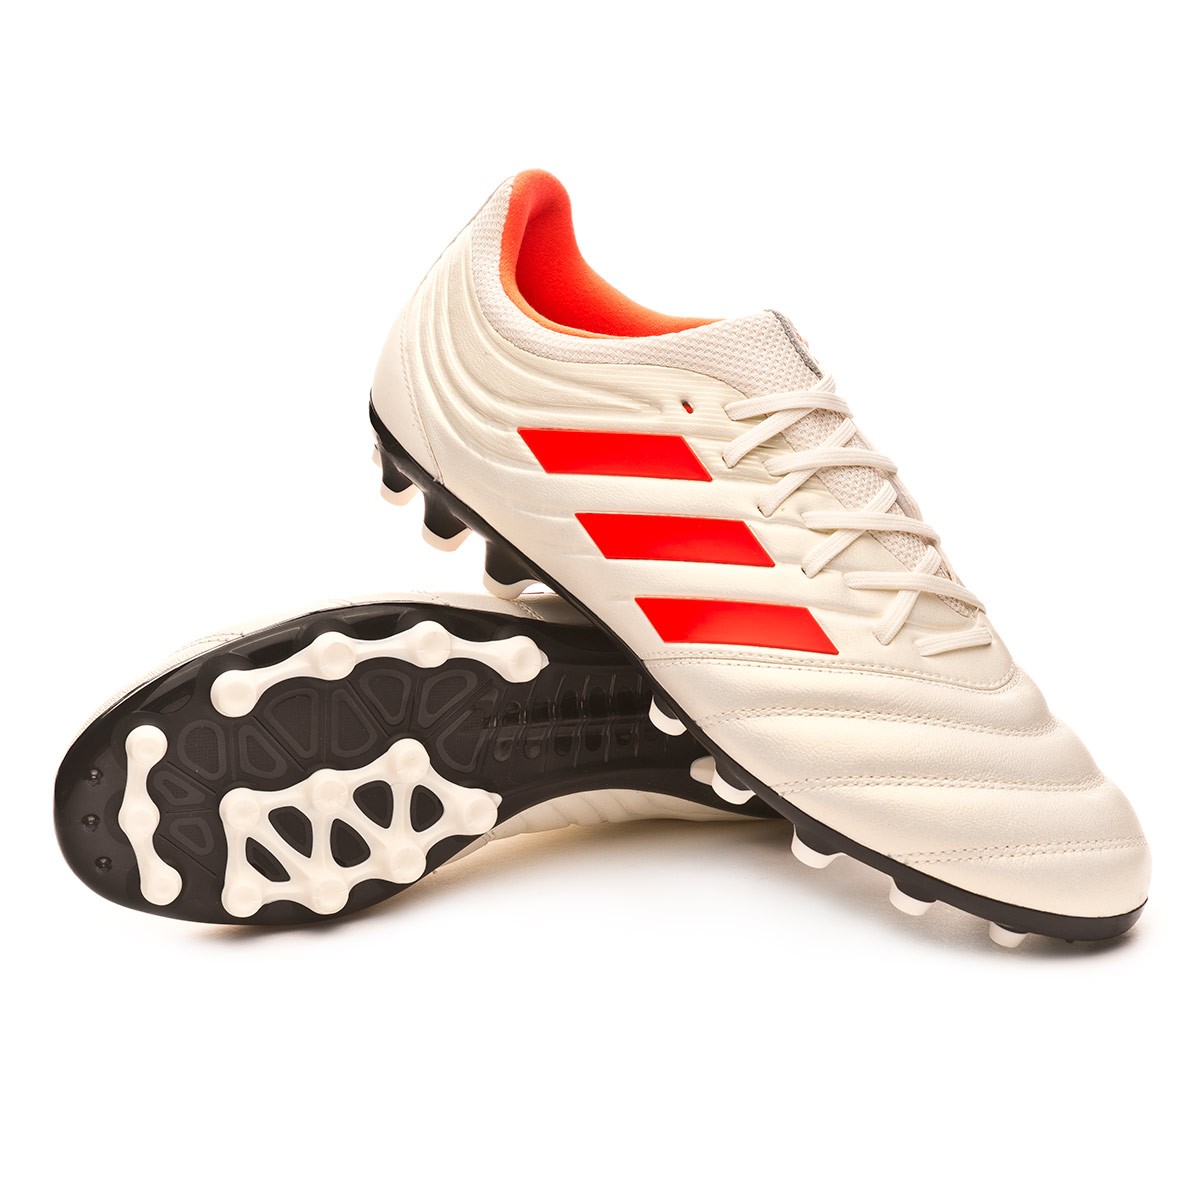 Football Boots adidas Copa 19.3 AG Off 